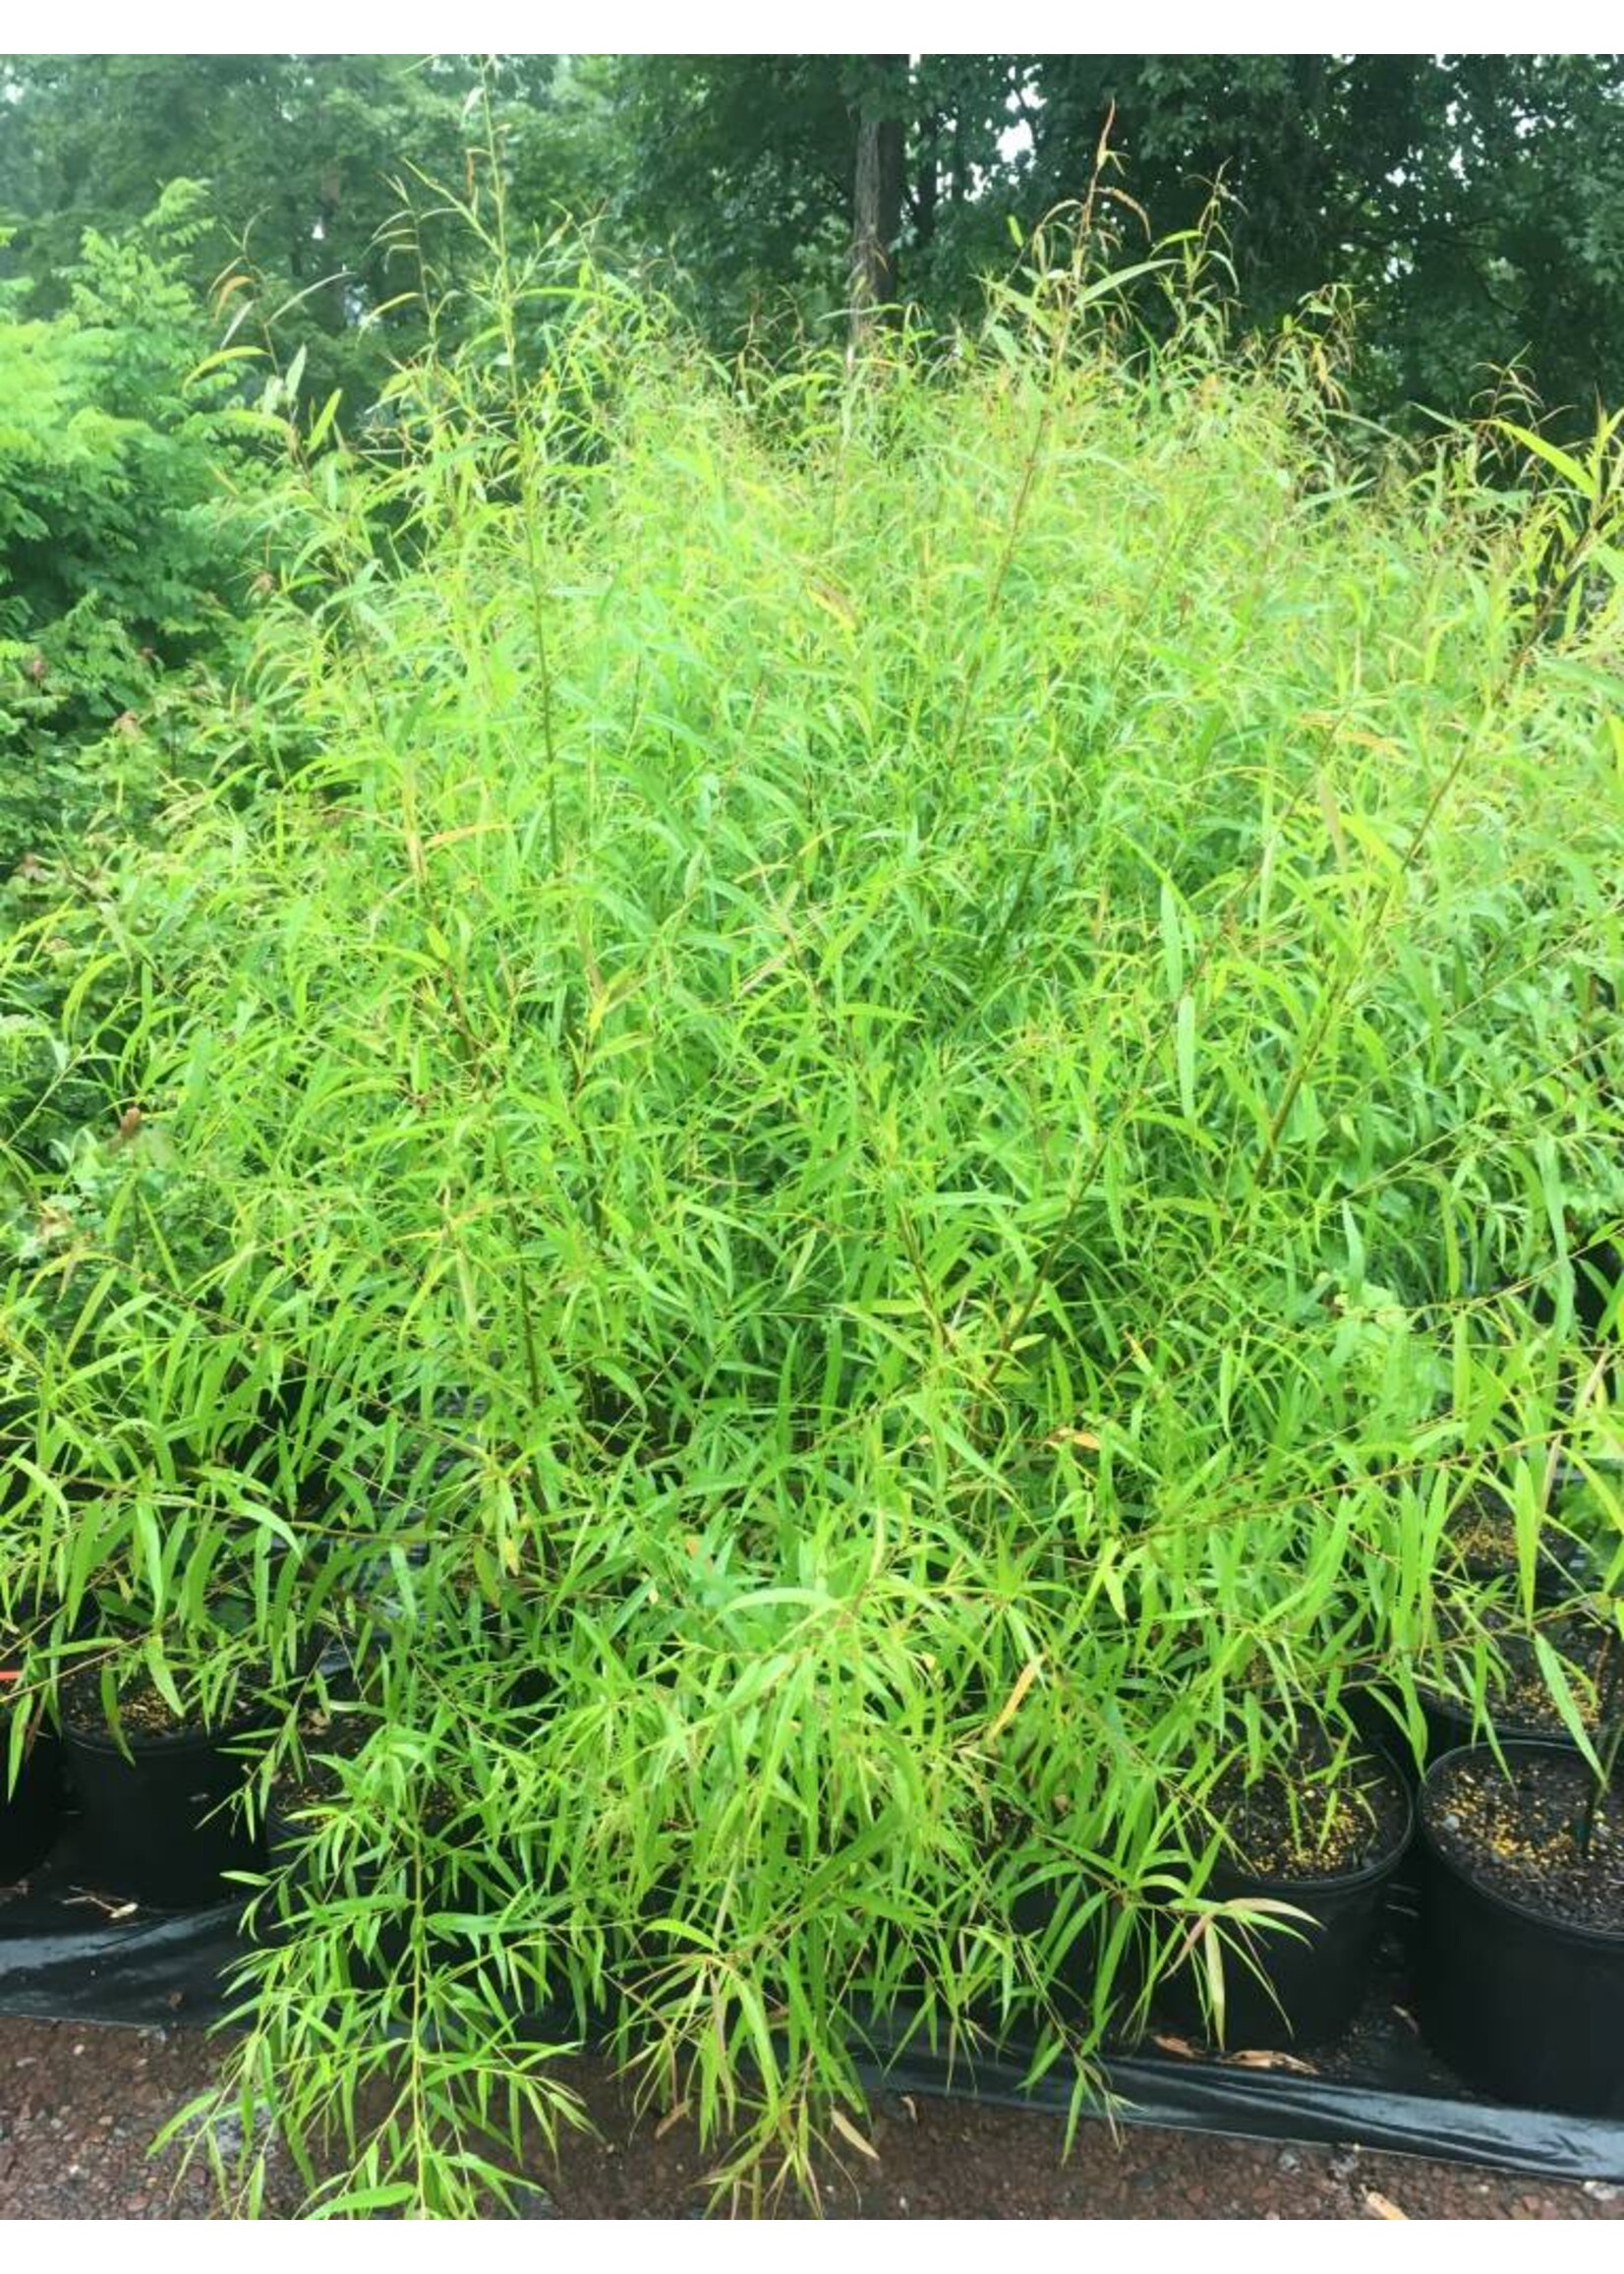 Rain Garden Salix nigra, Black Willow #3